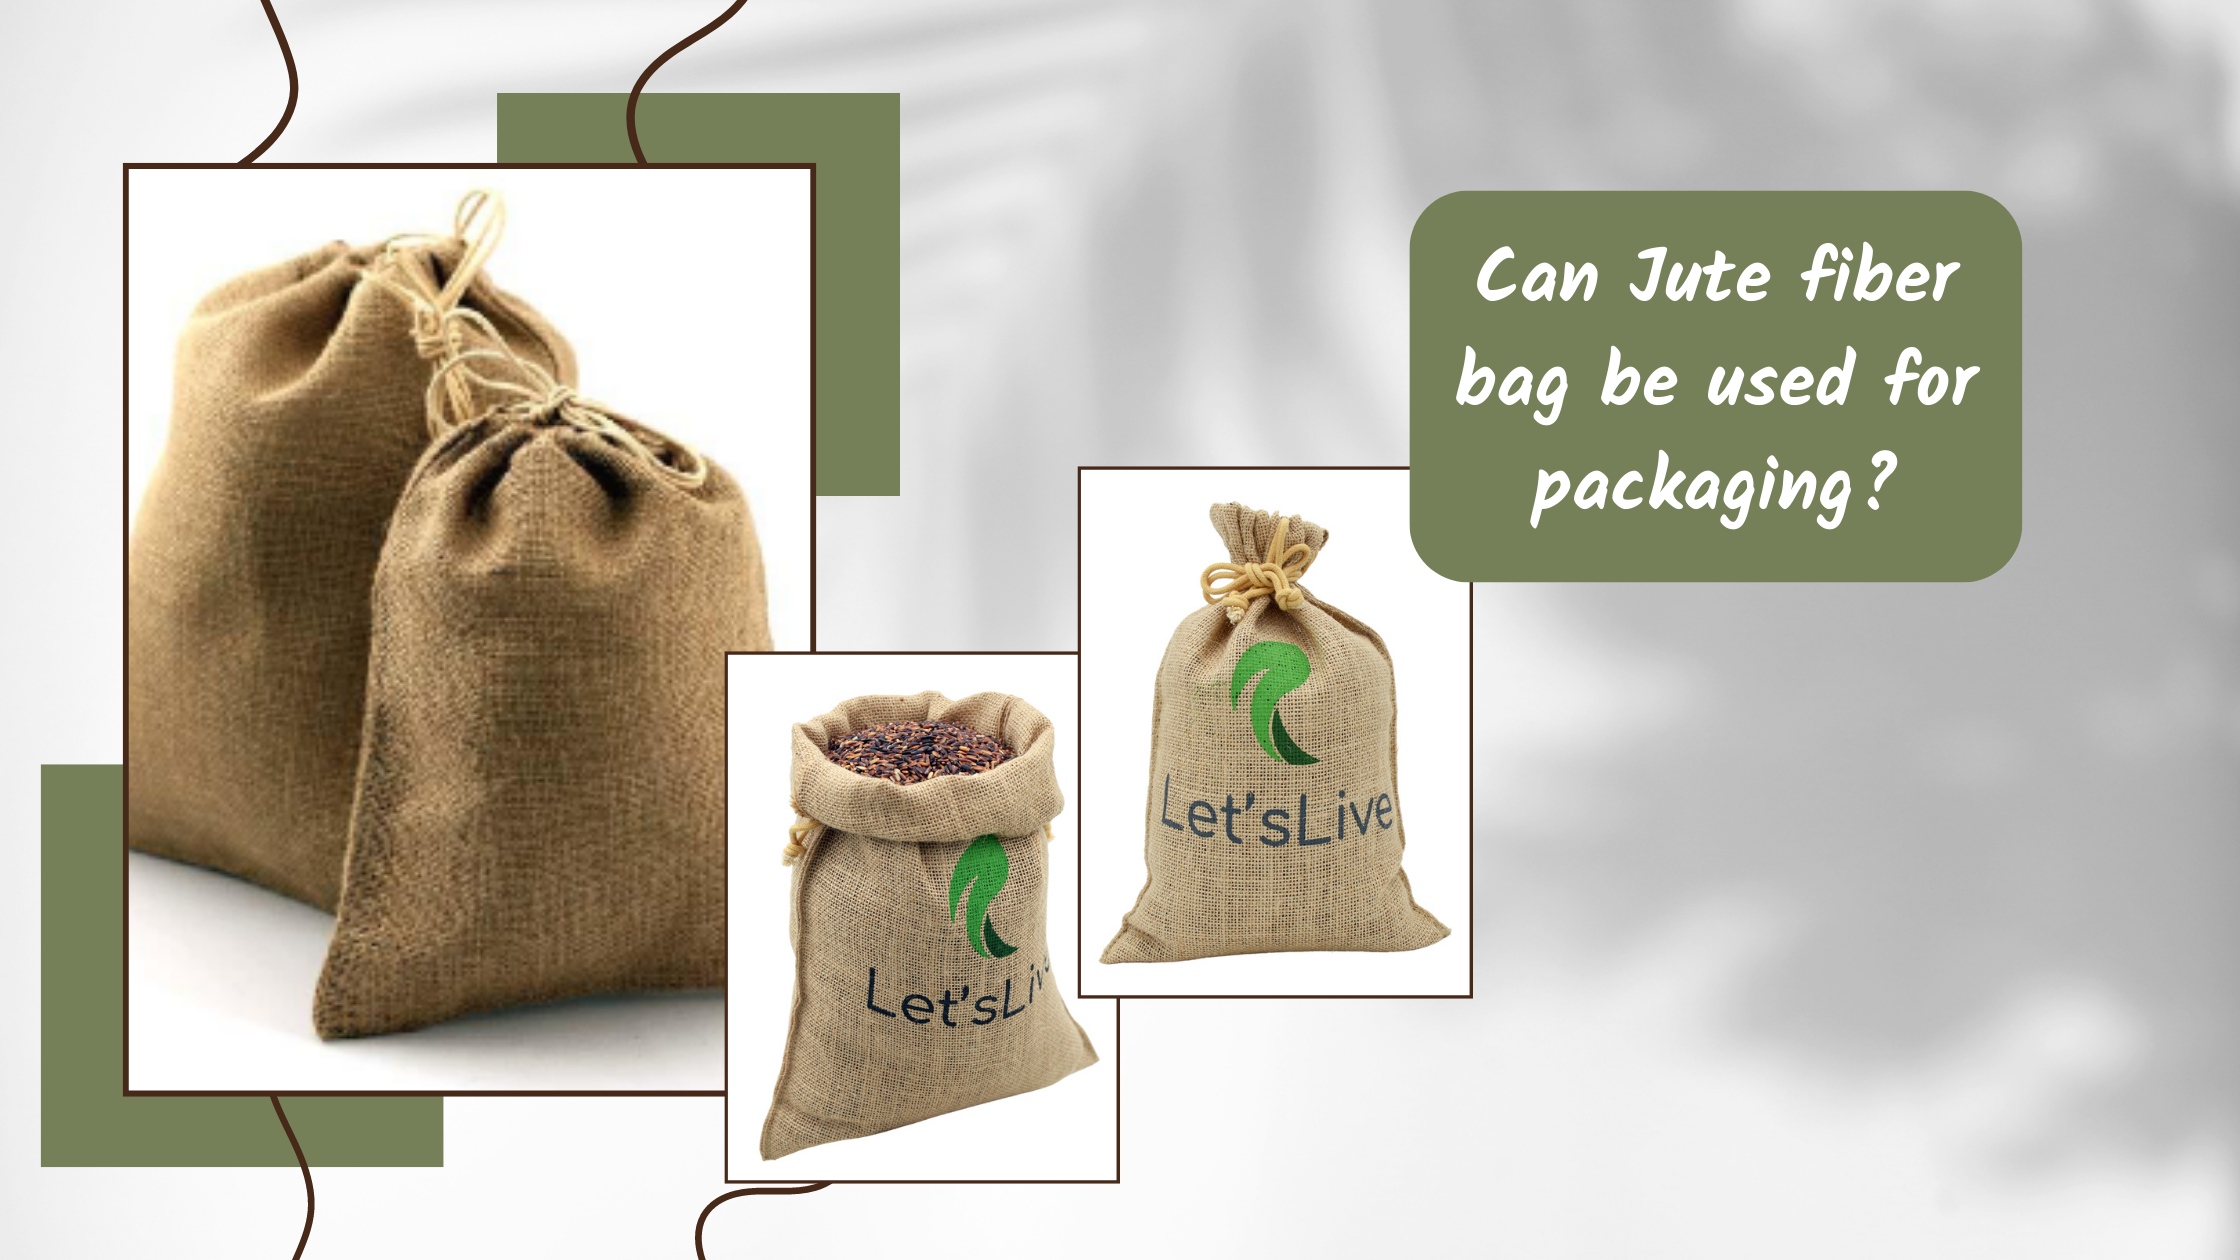 Can Jute fiber bag be used for packaging? – Let'sLive